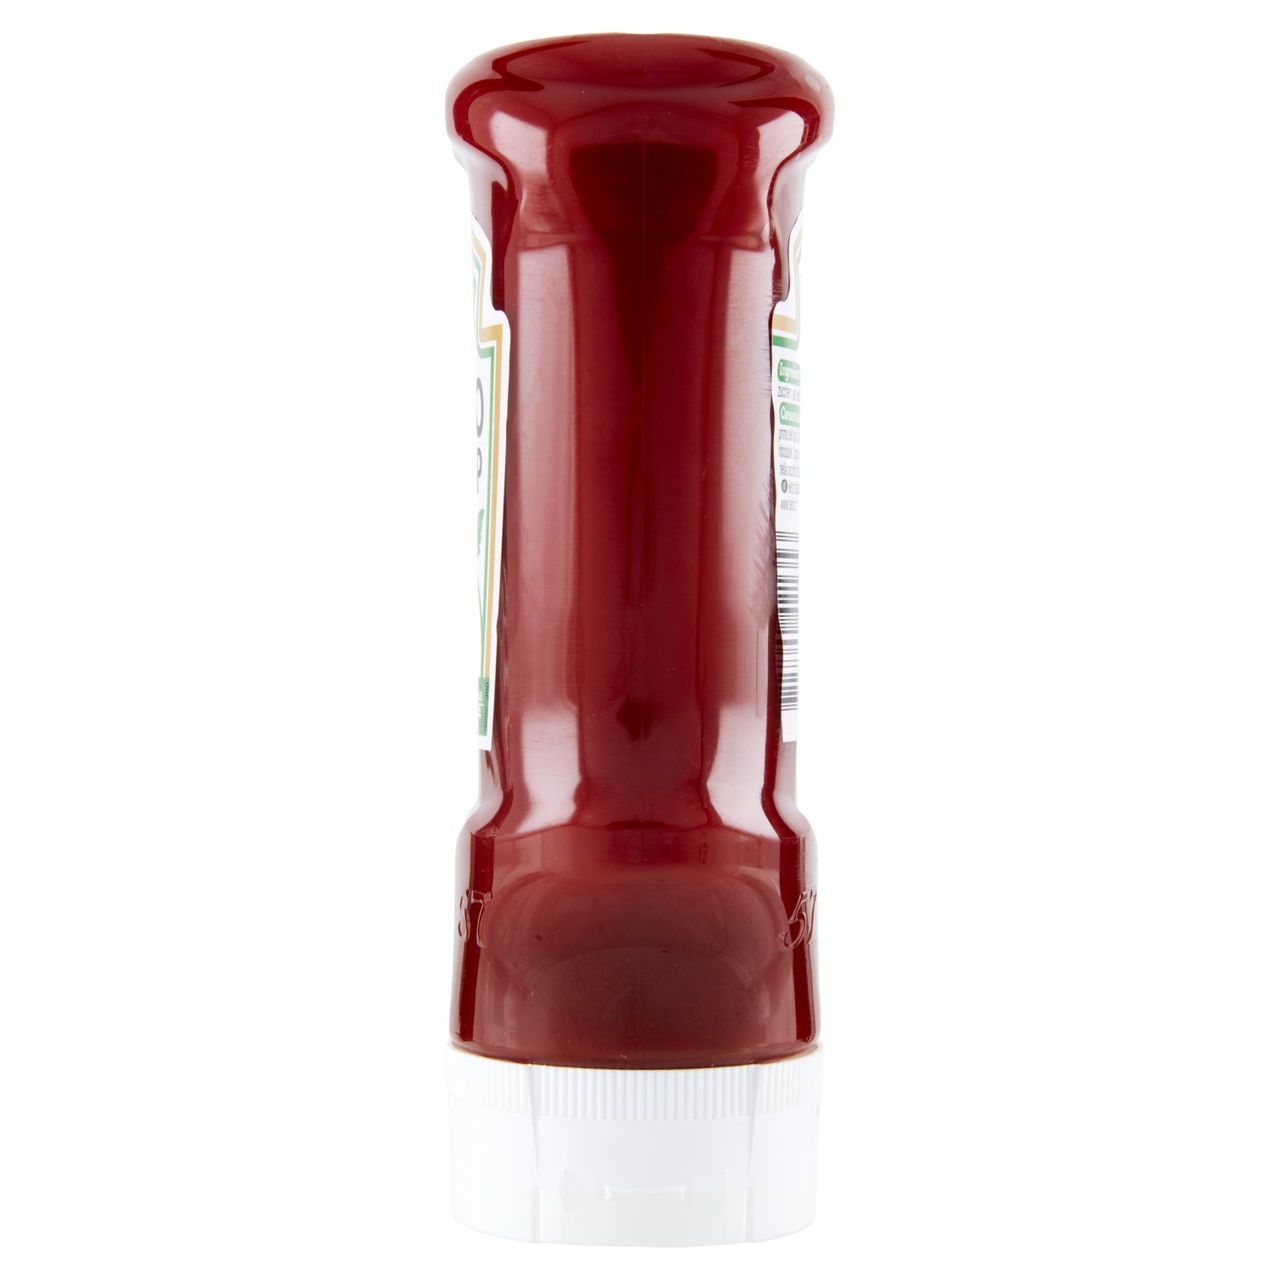 Heinz Tomato Ketchup 400 ml in vendita online